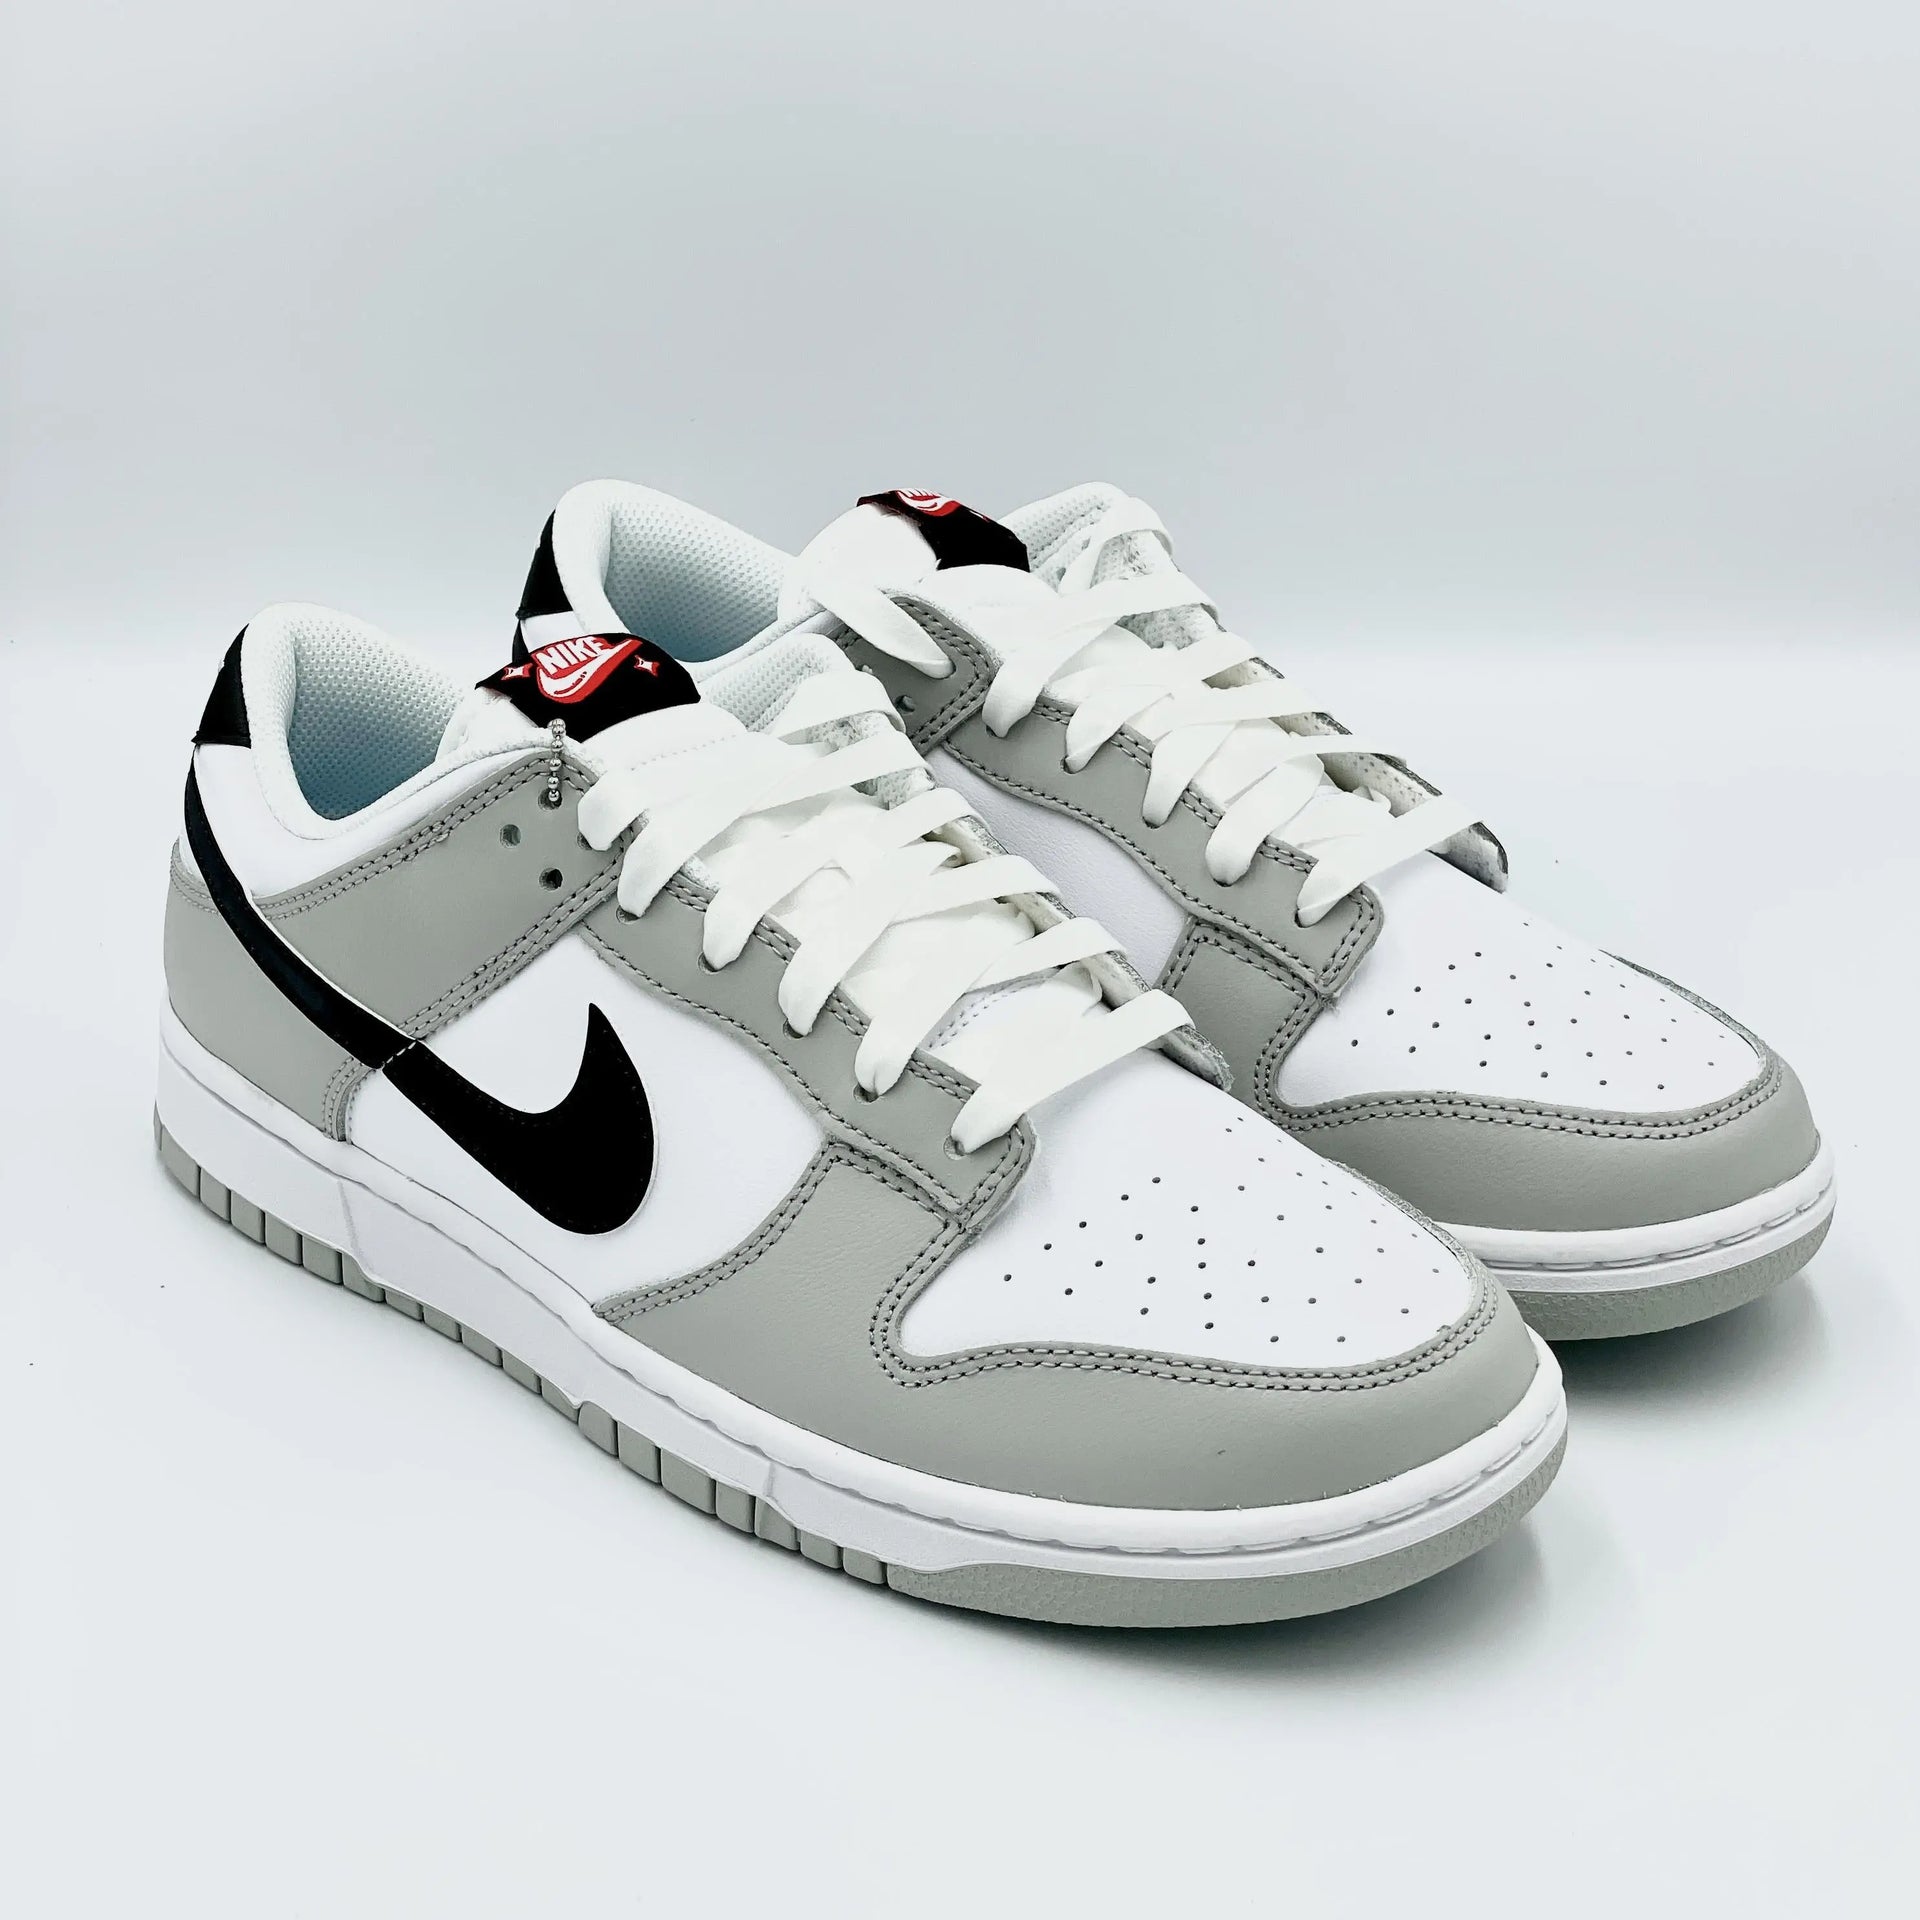 Nike Dunk Low Setsubun - SA Sneakers